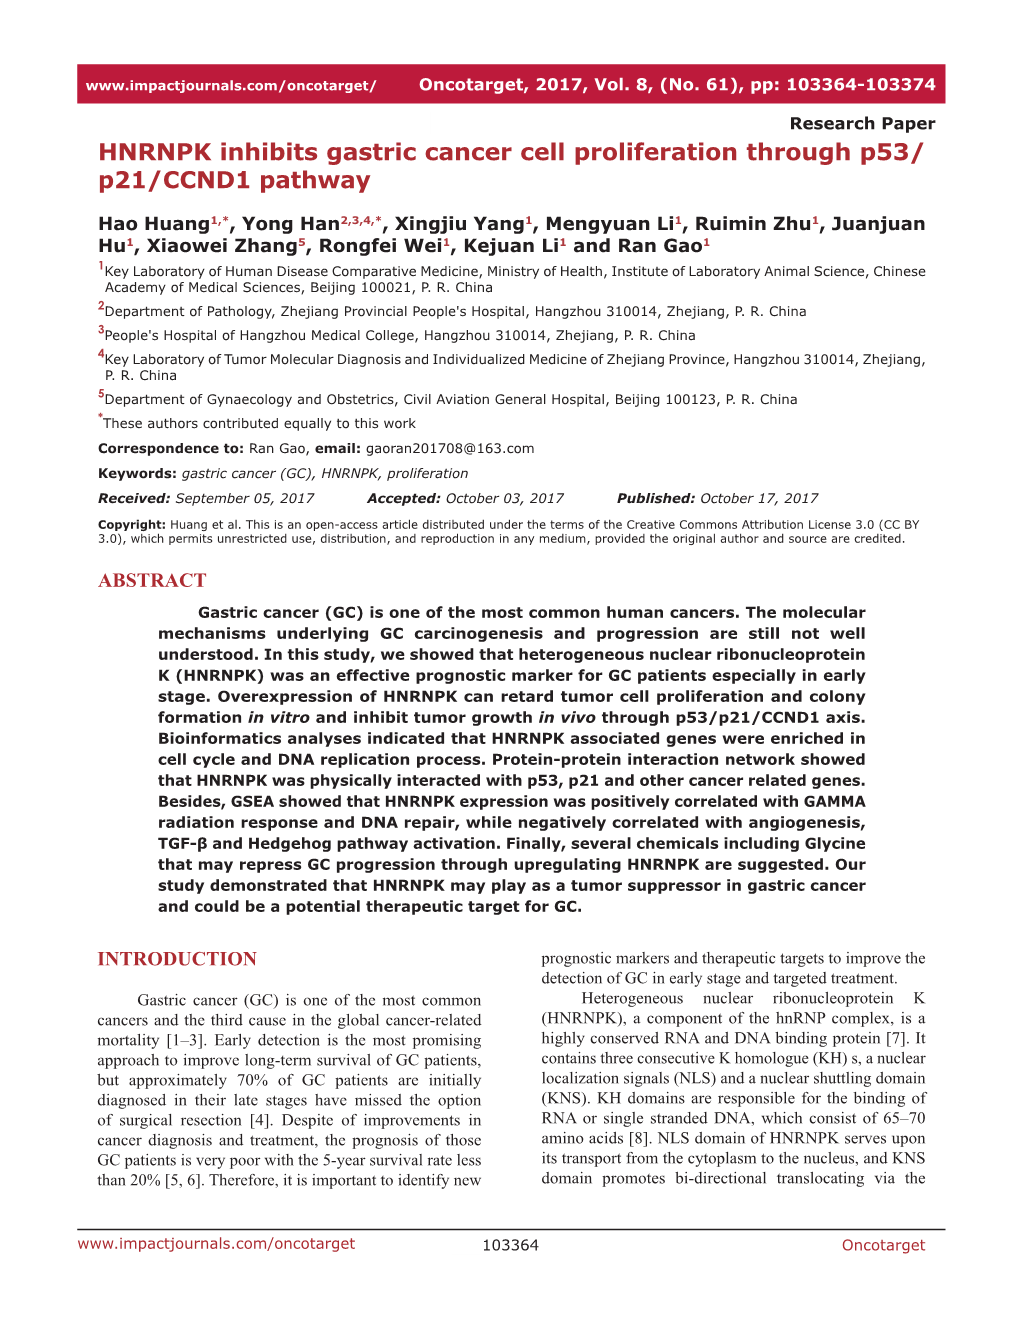 HNRNPK Inhibits Gastric Cancer Cell Proliferation Through P53/ P21/CCND1 Pathway